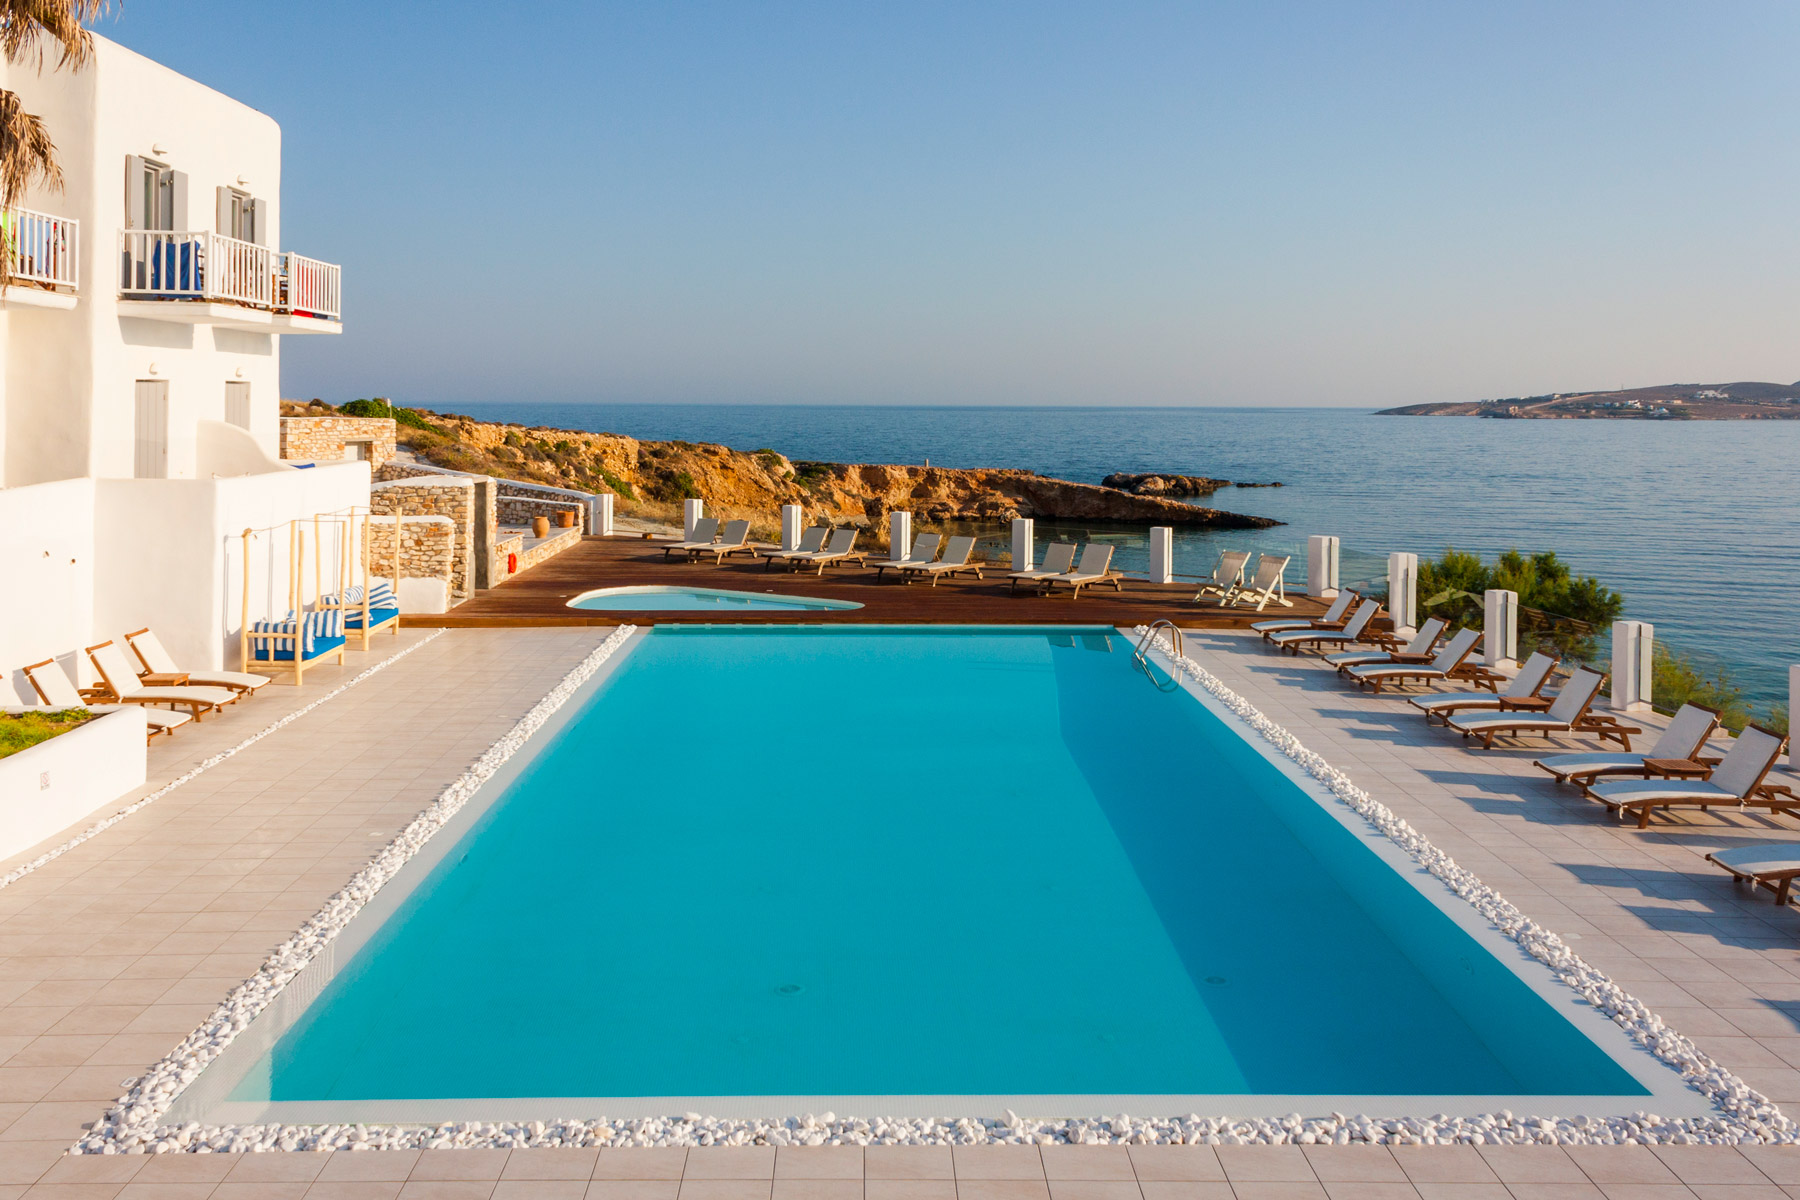 4* Paros Bay Sea Resort Hotel - Πάρος ✦ 2 Ημέρες (1 Διανυκτέρευση) ✦ 2 άτομα ✦ 2 ✦ 01/05/2022 έως 30/09/2022 ✦ Δίπλα στην Παραλία!